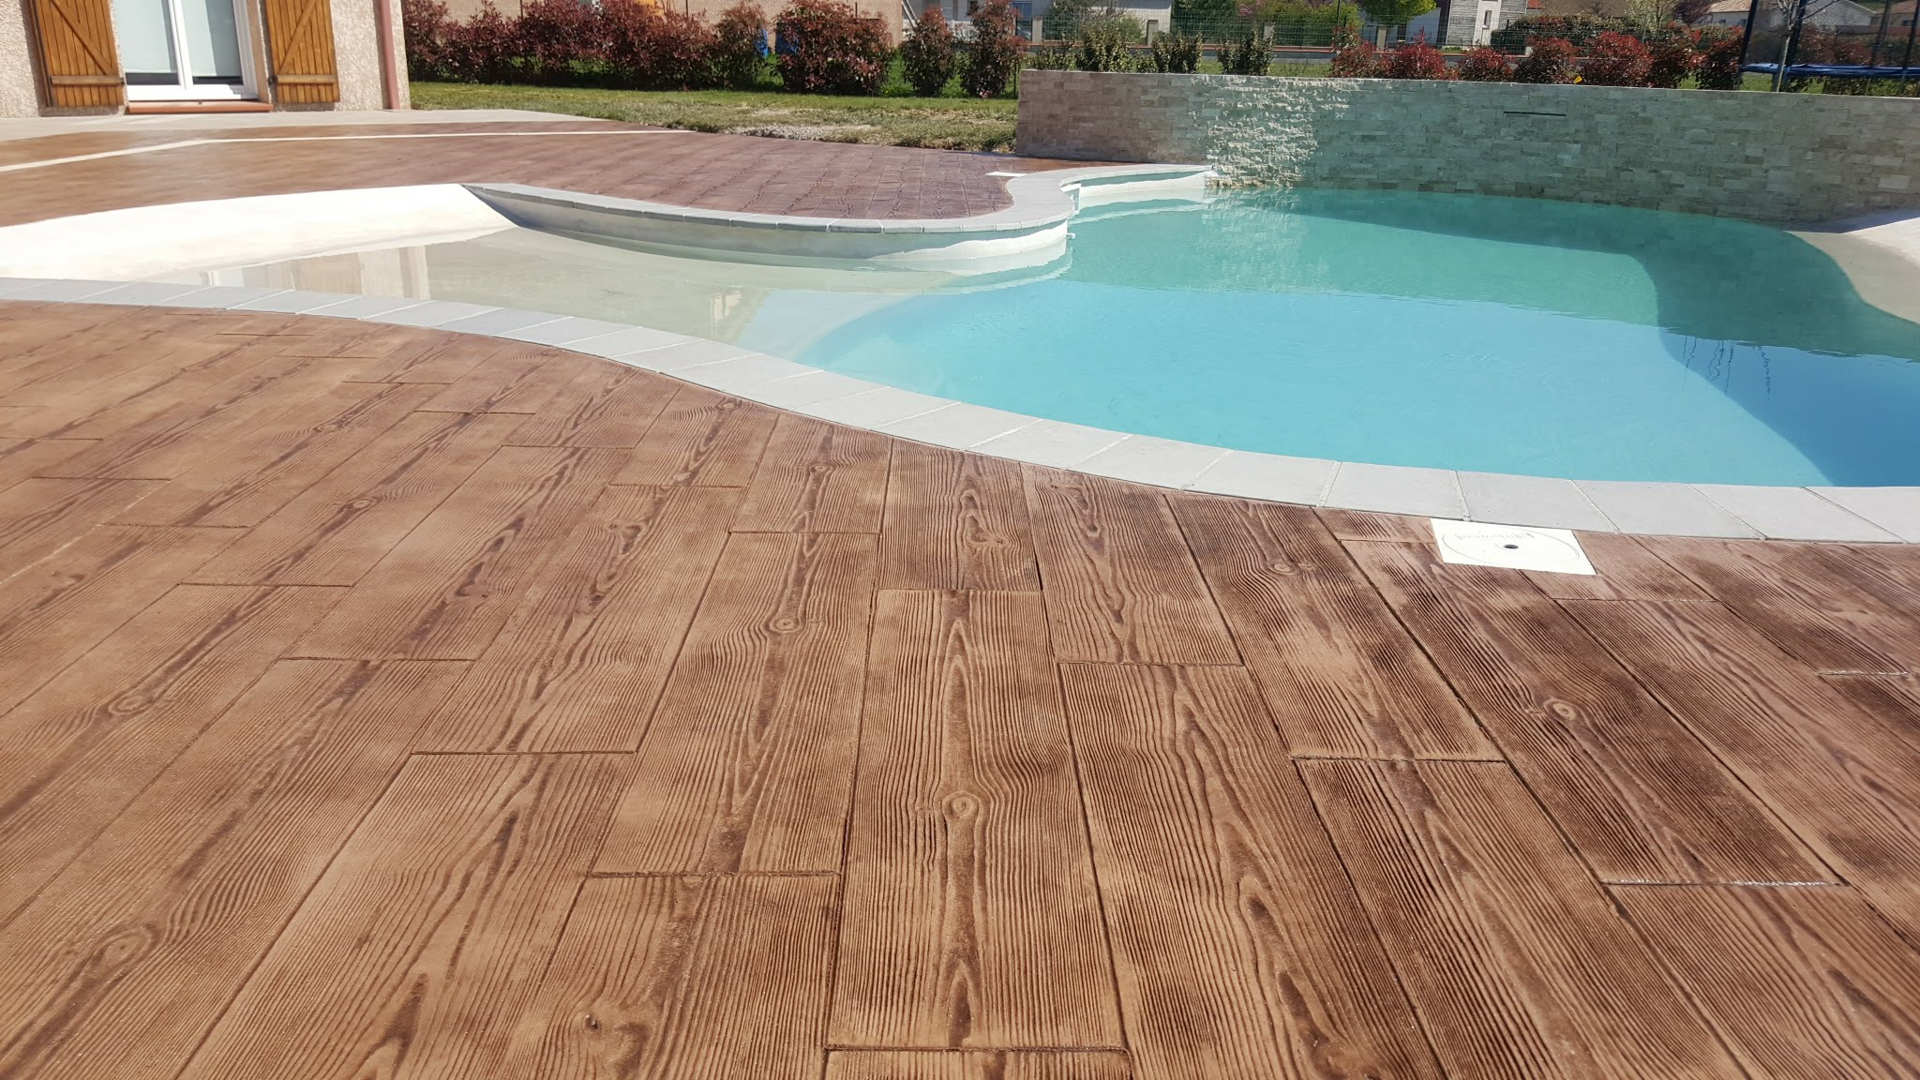  printed concrete paving around the swimming pool